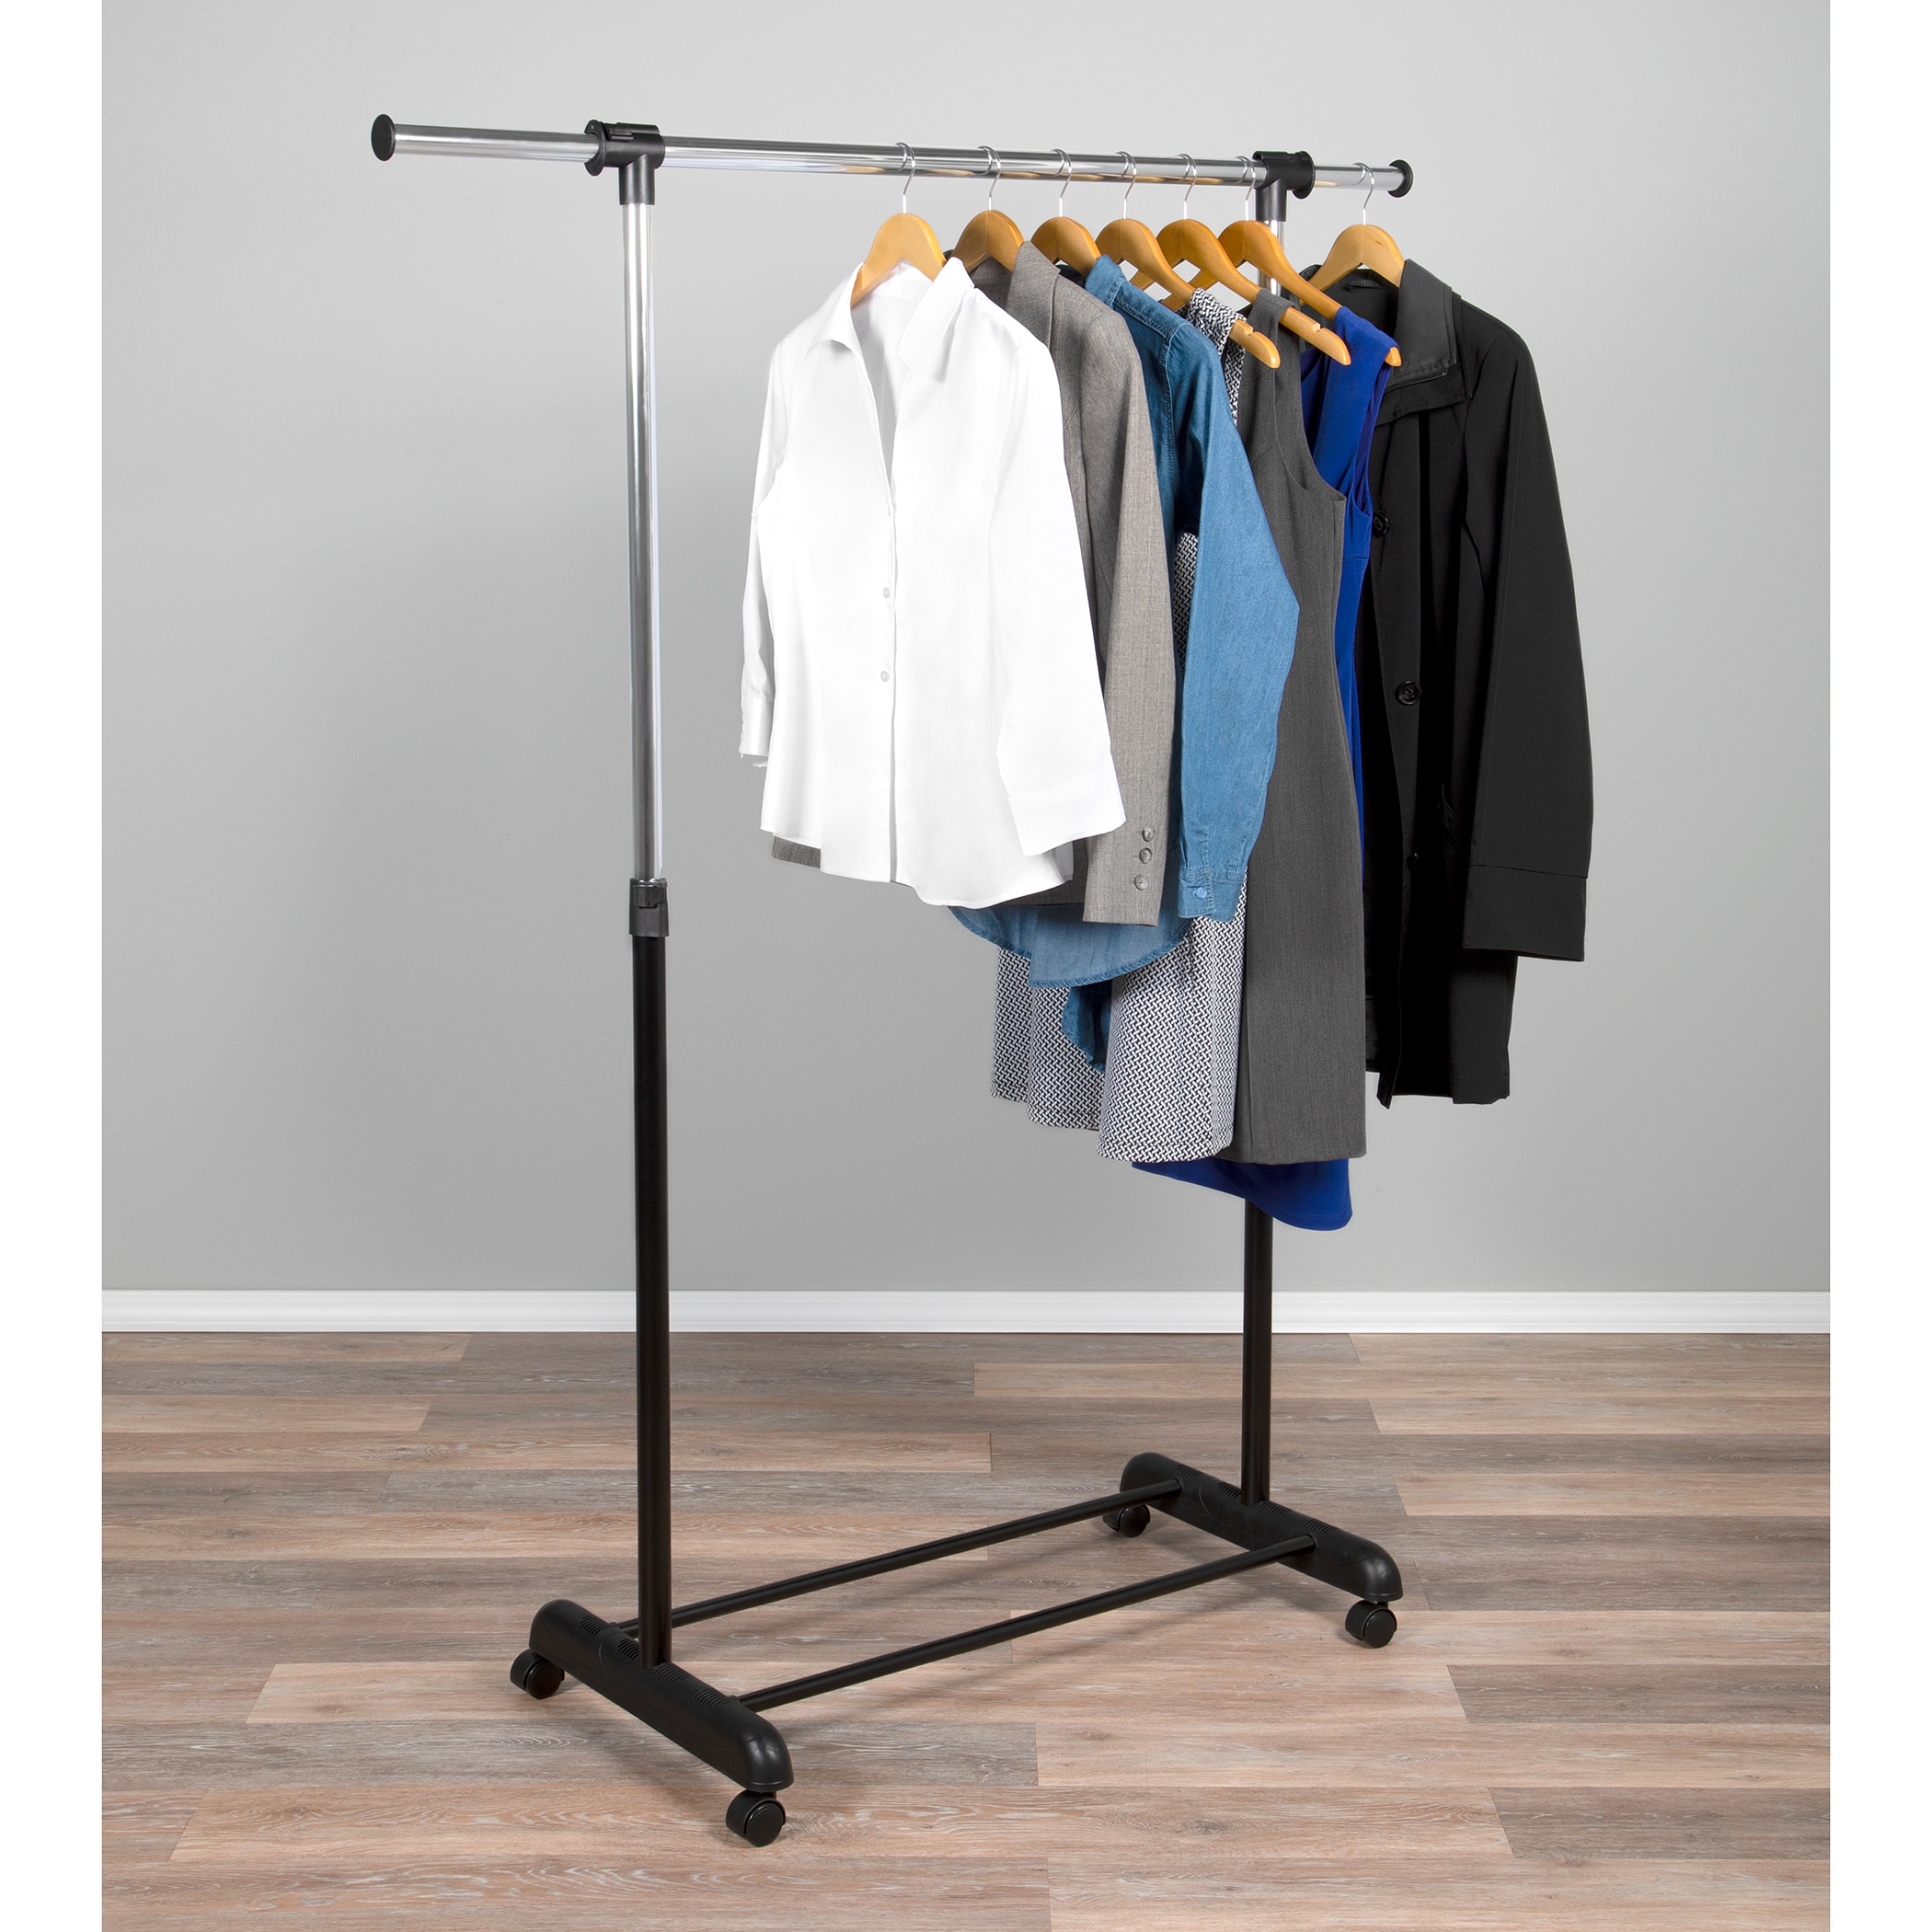 Zongool Clothing Rack Garment Rack W/ Locking Wheels Portable Clothing Rack 